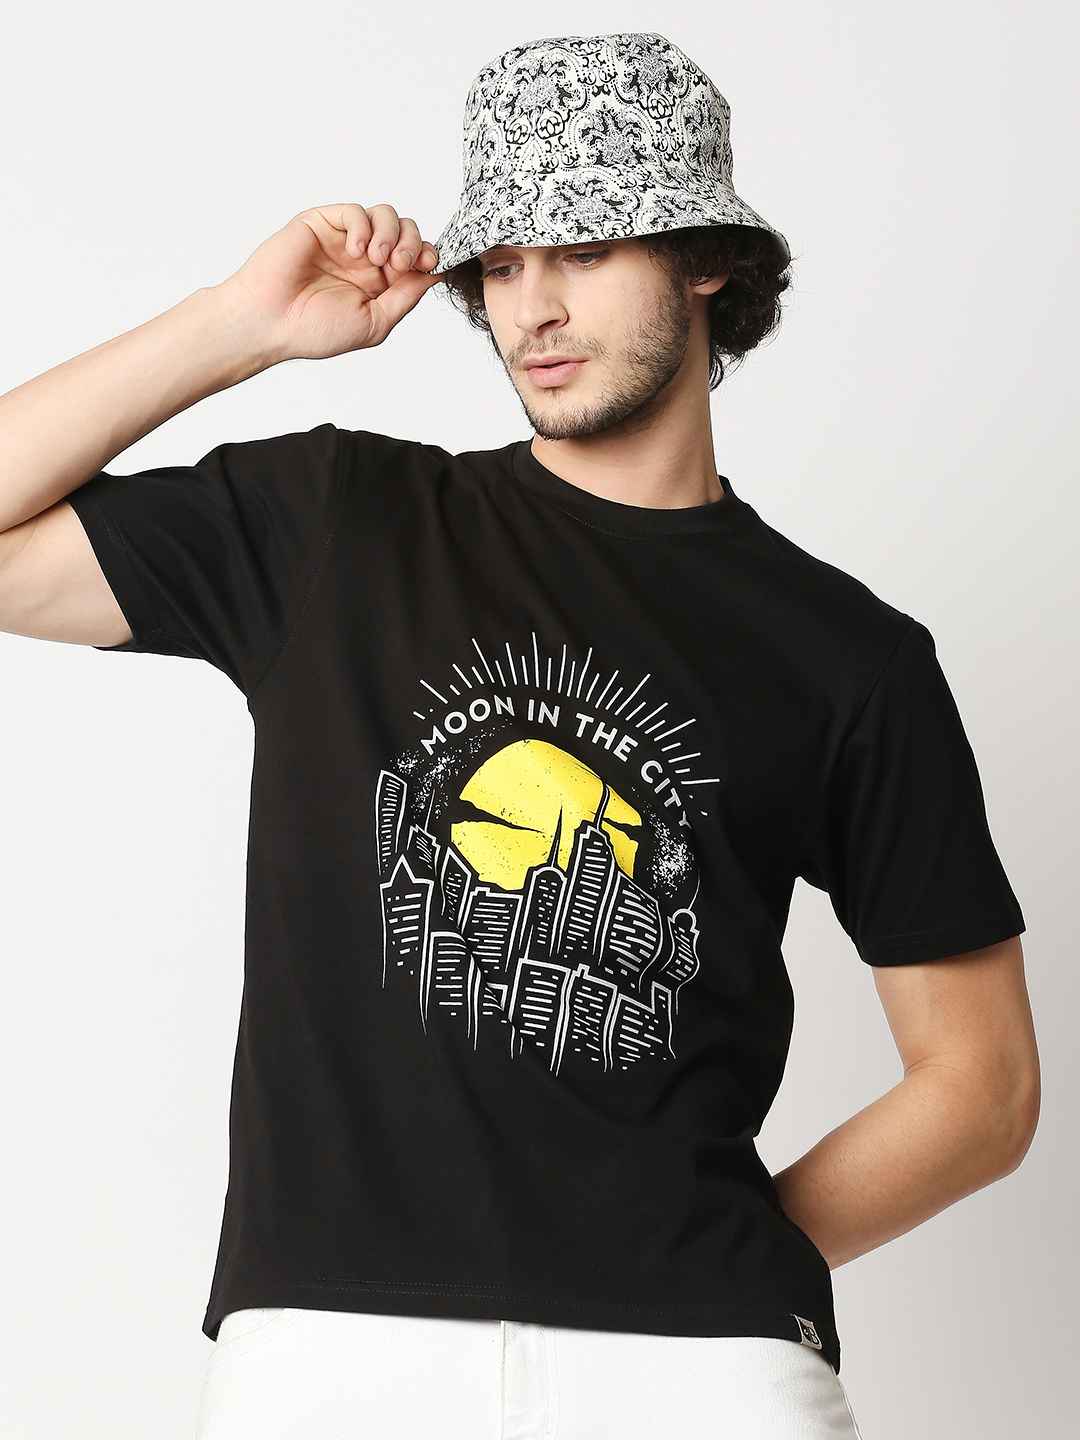 Buy Men's Comfort fit Black chest print T-shirt